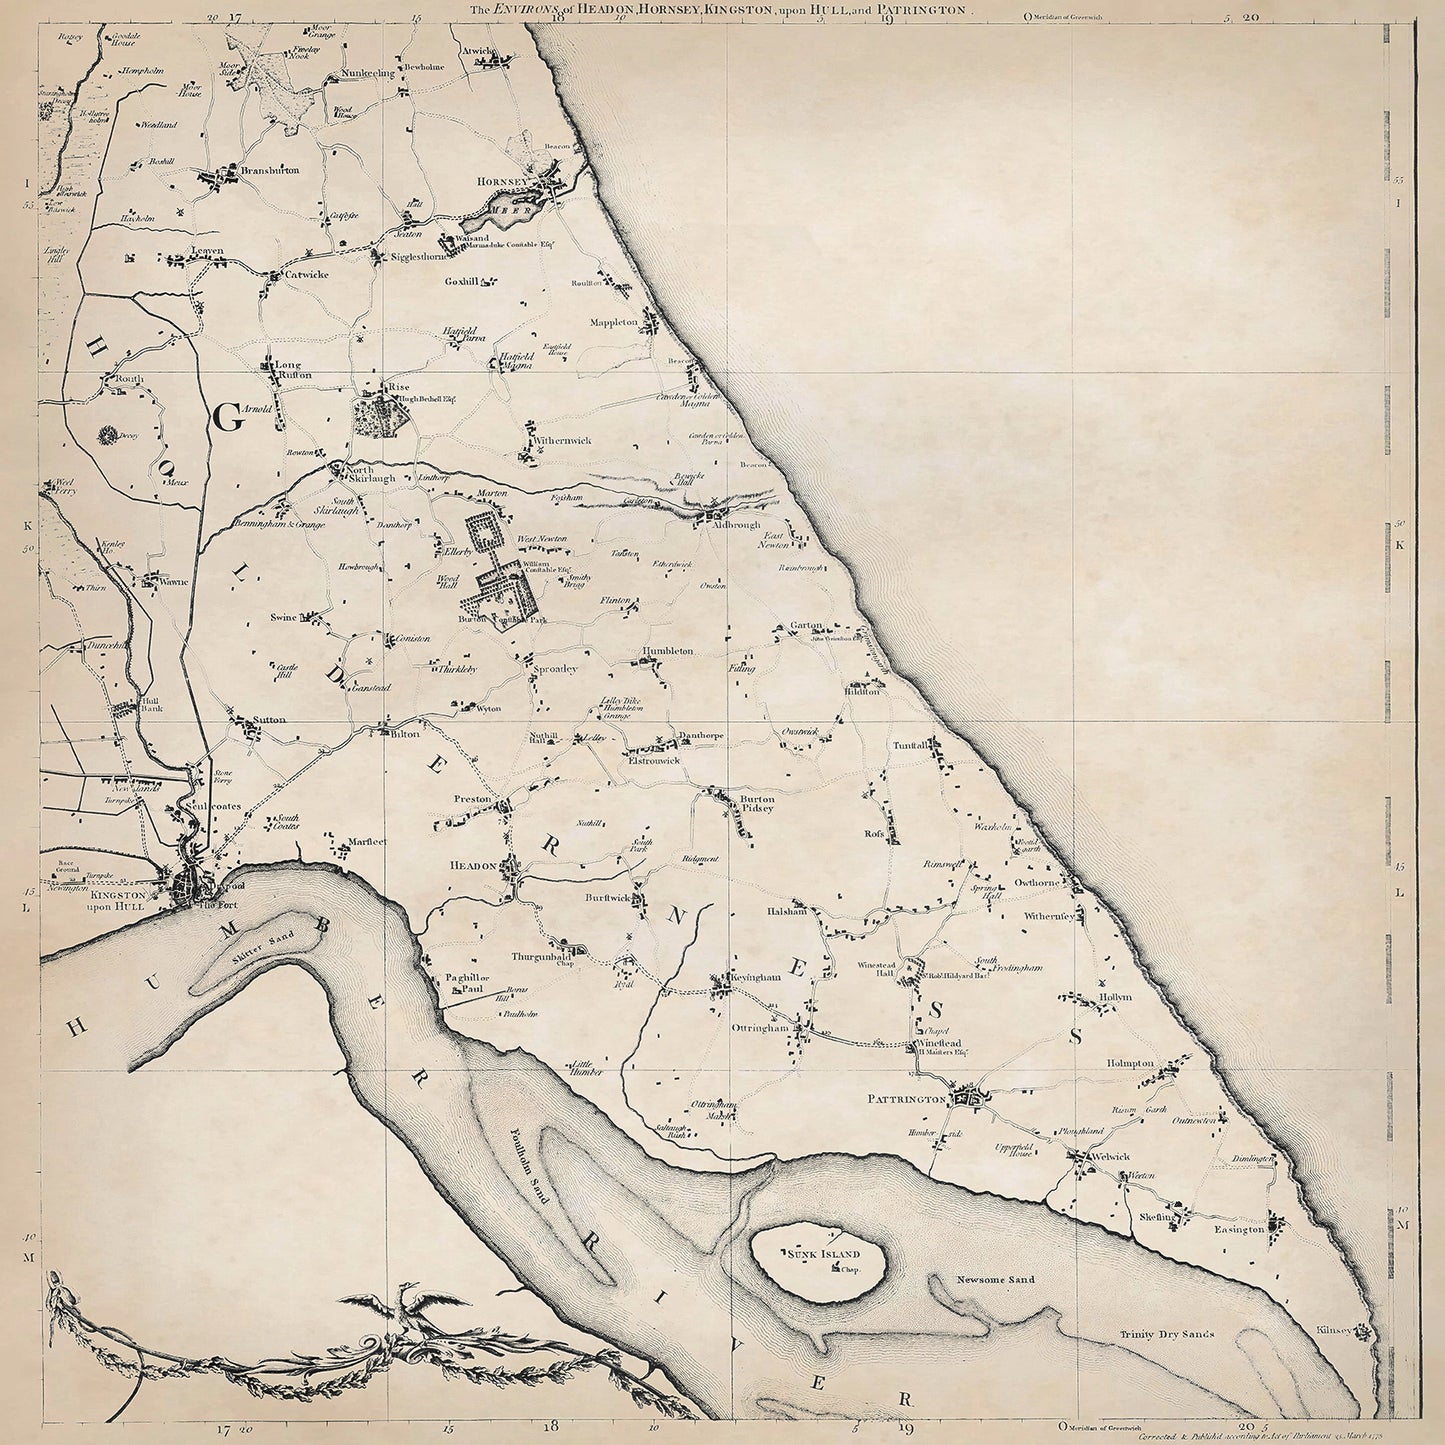 Yorkshire in 1771 sheet 3-5 - shows the Headon, Hornsey, Kingston upon Hull, and Patrington area